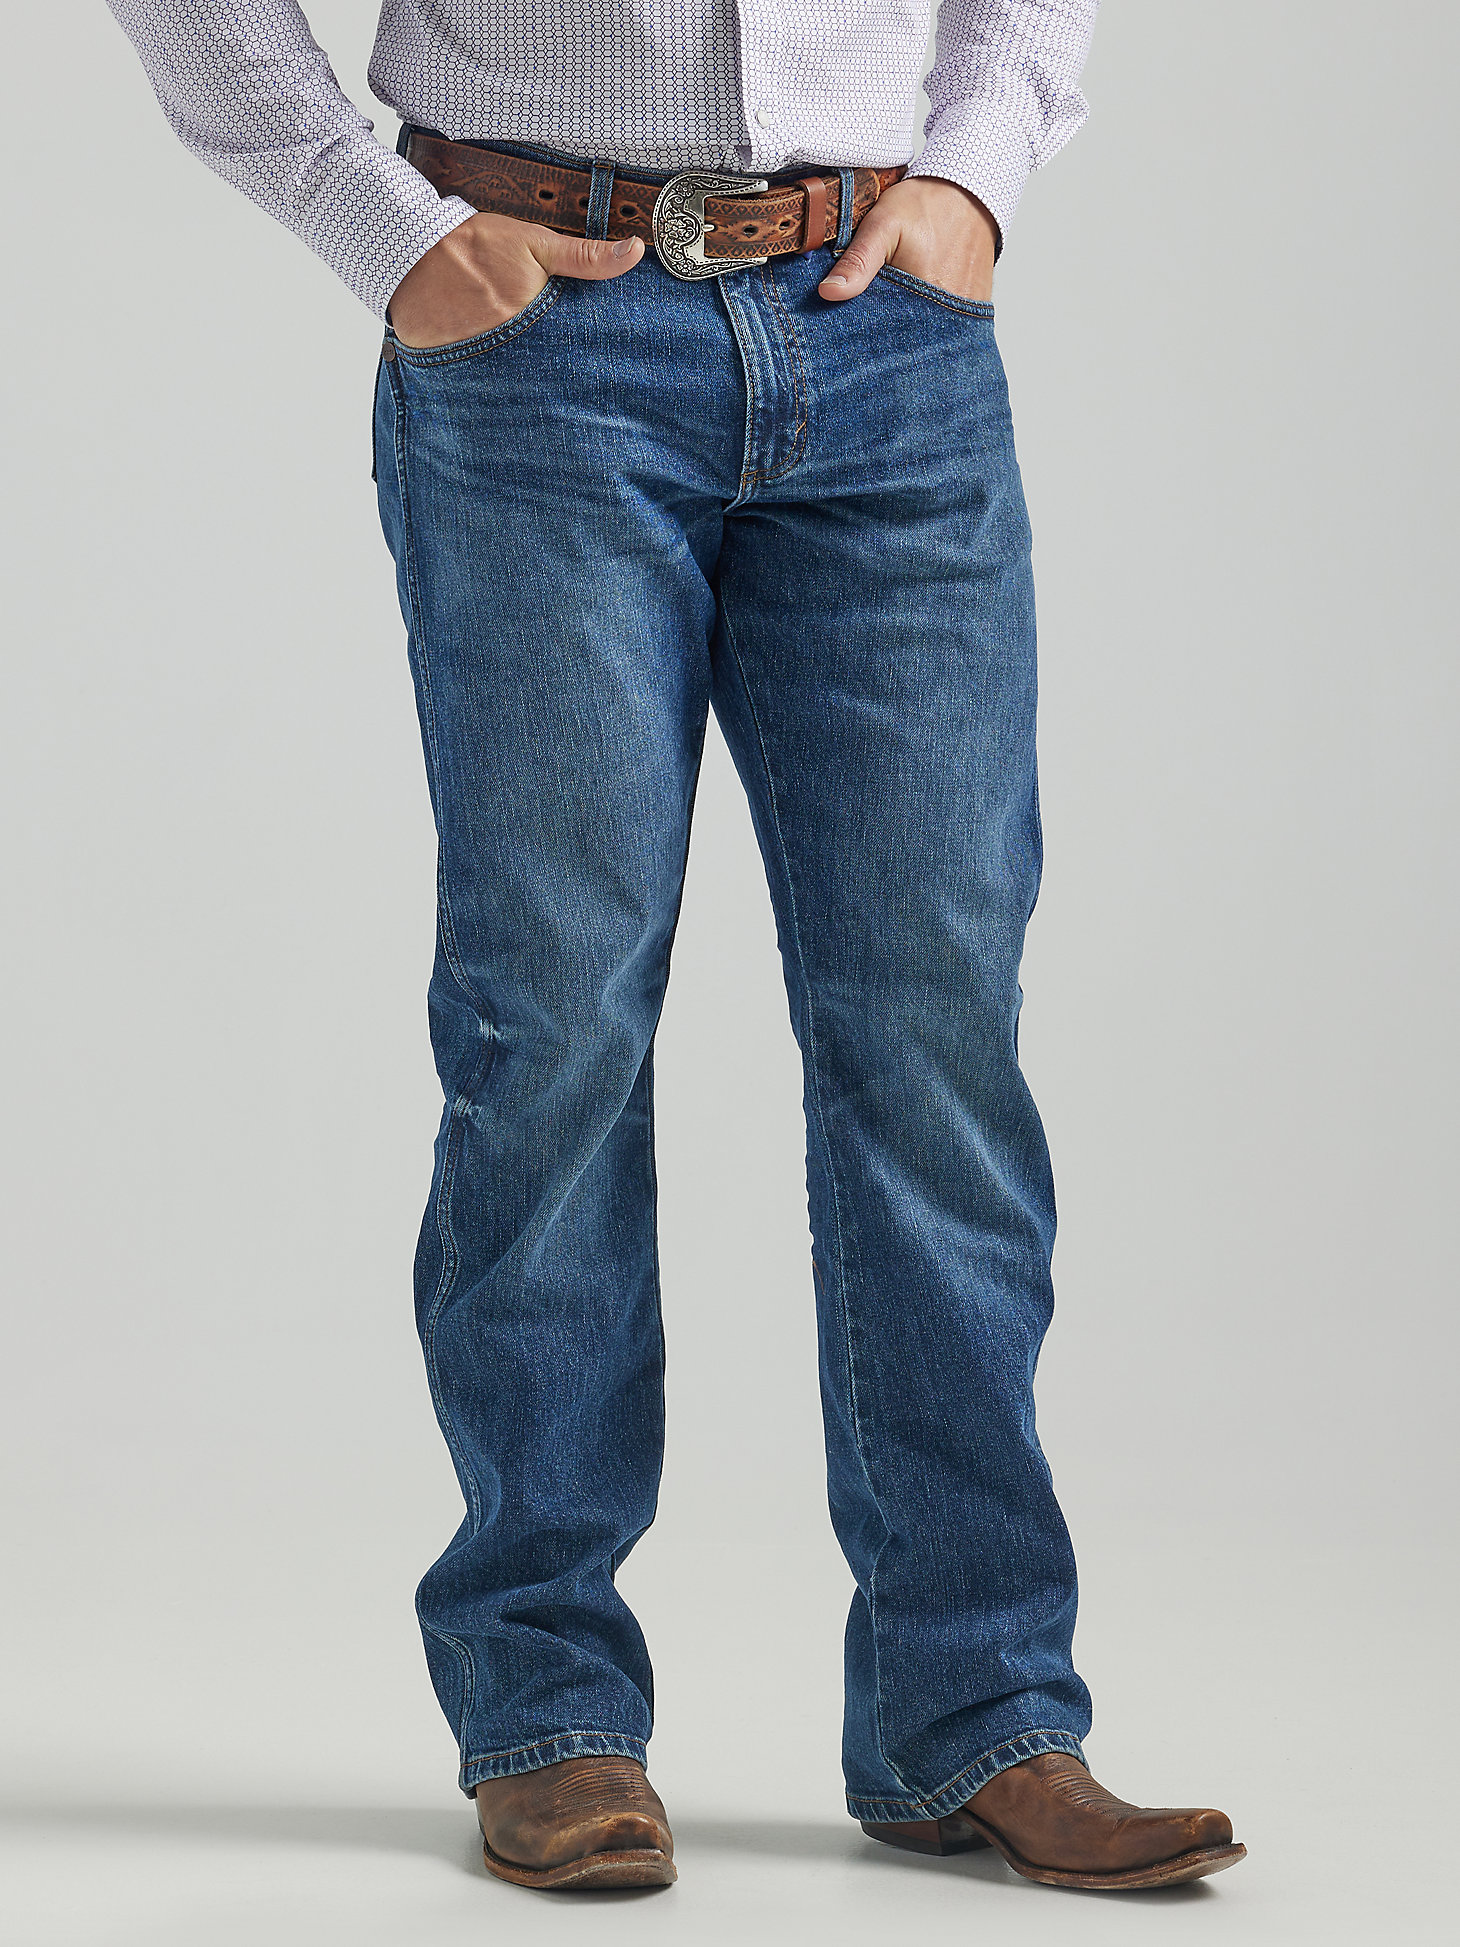 The Wrangler Retro® Premium Jean: Men's Slim Boot in Wild West main view